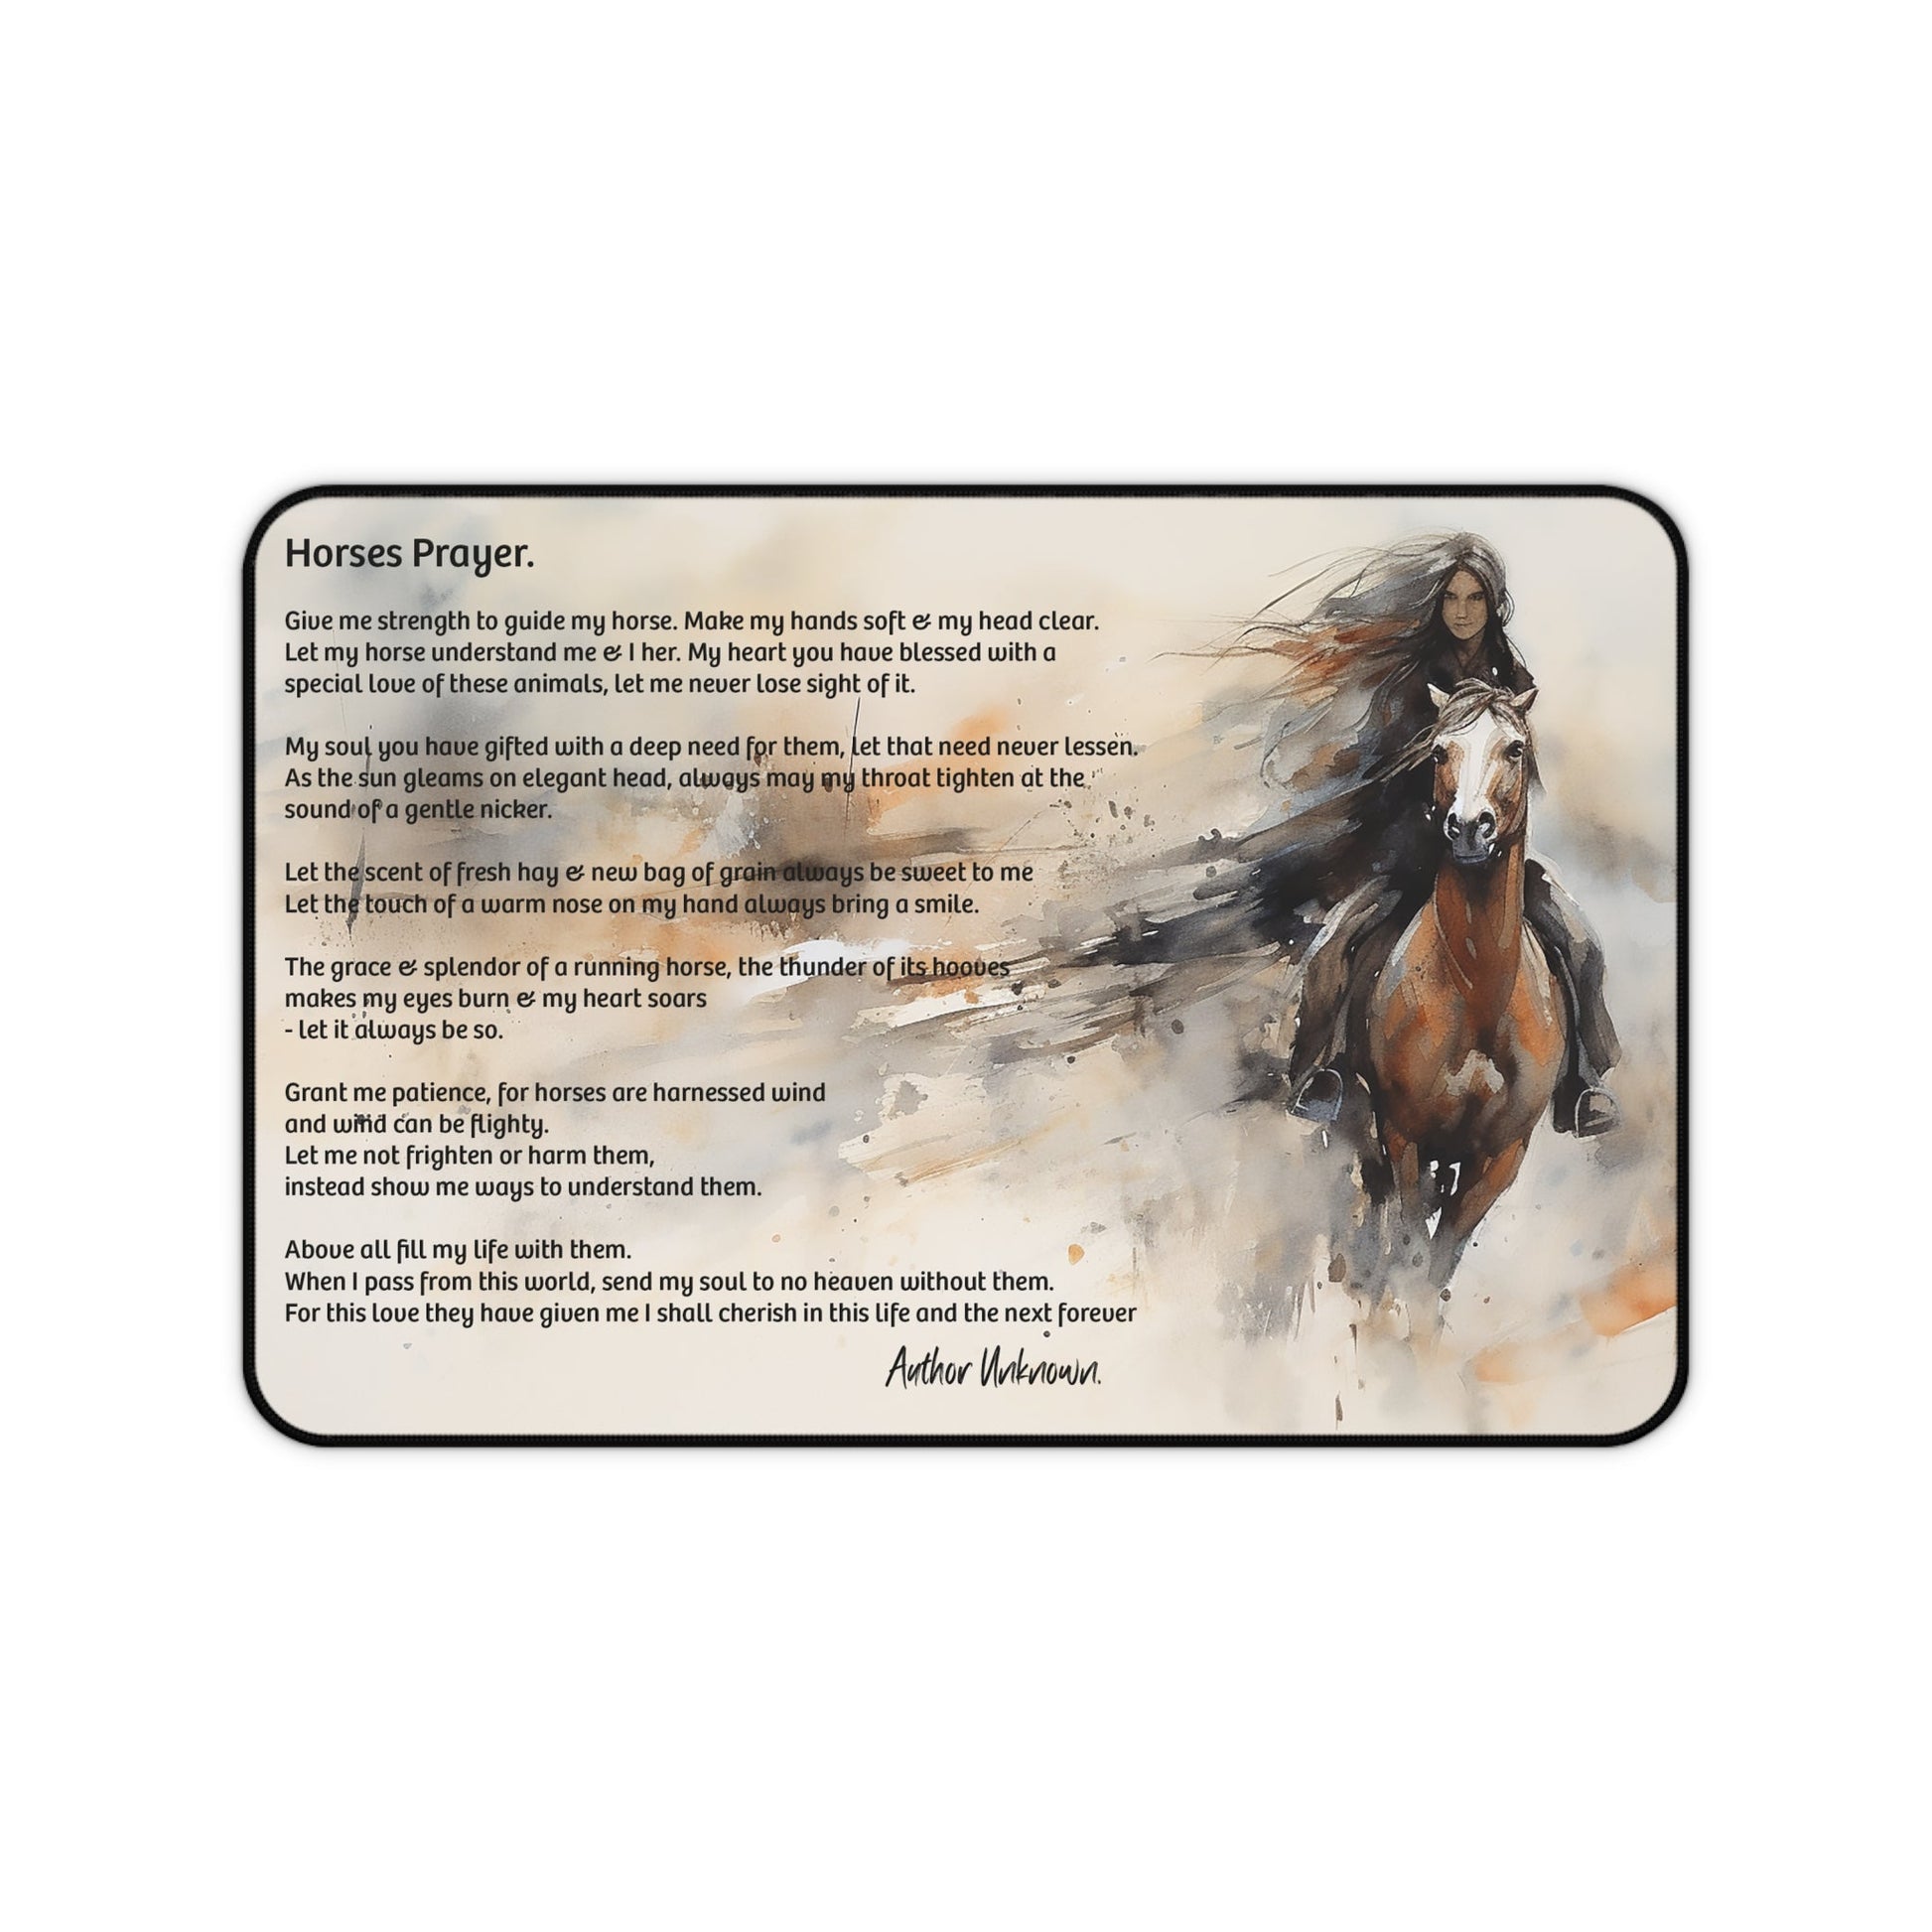 Horse Prayer MousePad / Desk Mat, Prayer for a Horse in a Beautiful Watercoloer XL Desk Mat - Love of Horses, Perfect Gift for Horse Person - FlooredByArt